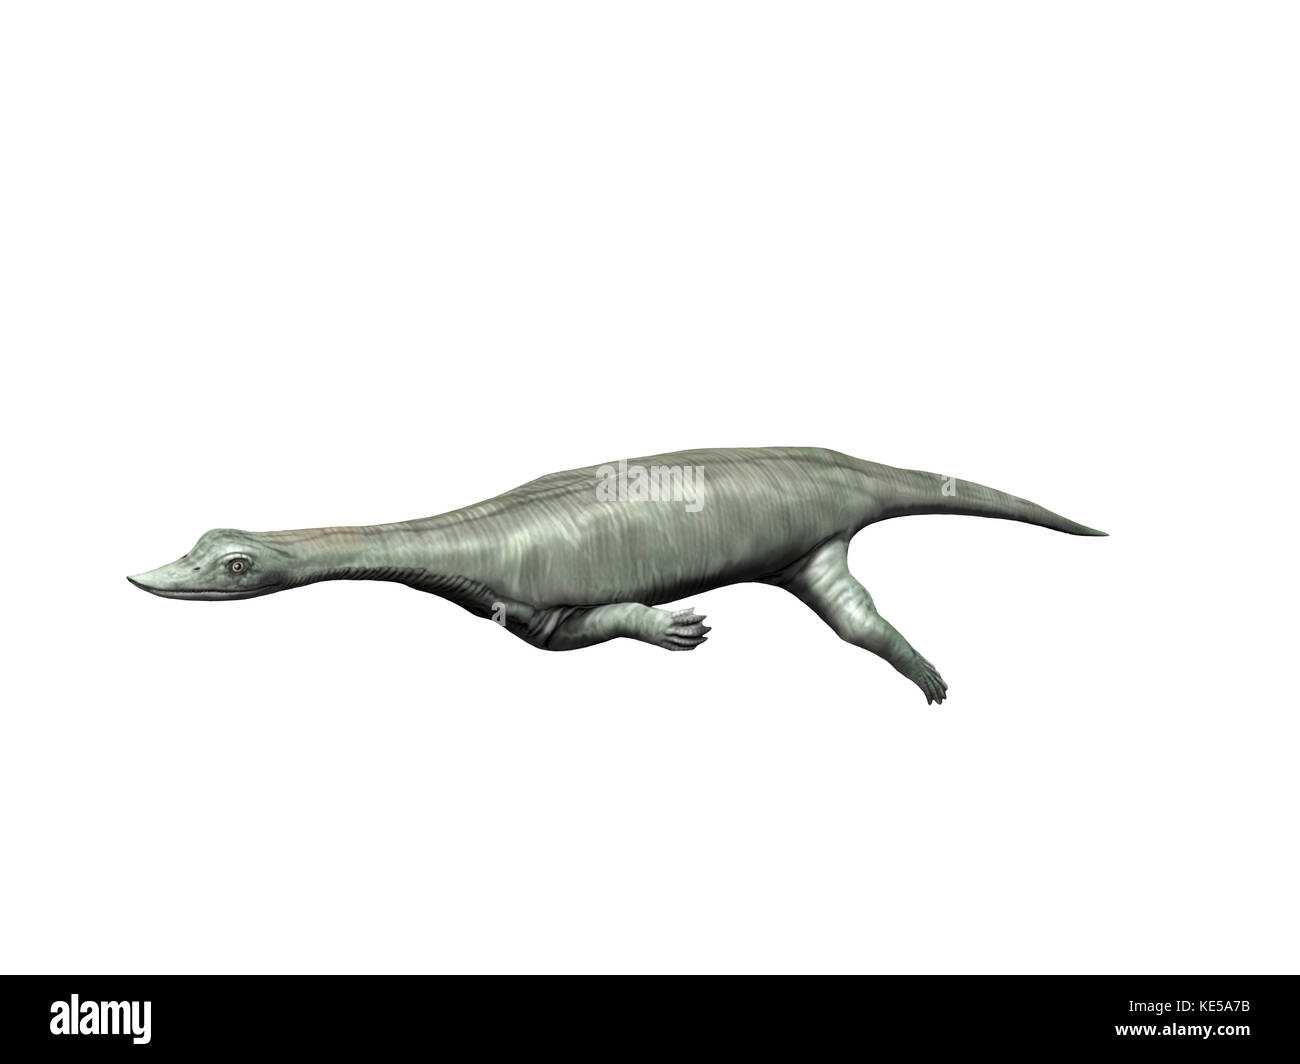 Wumengosaurus aquatic reptile from the Middle Triassic period. Stock Photo